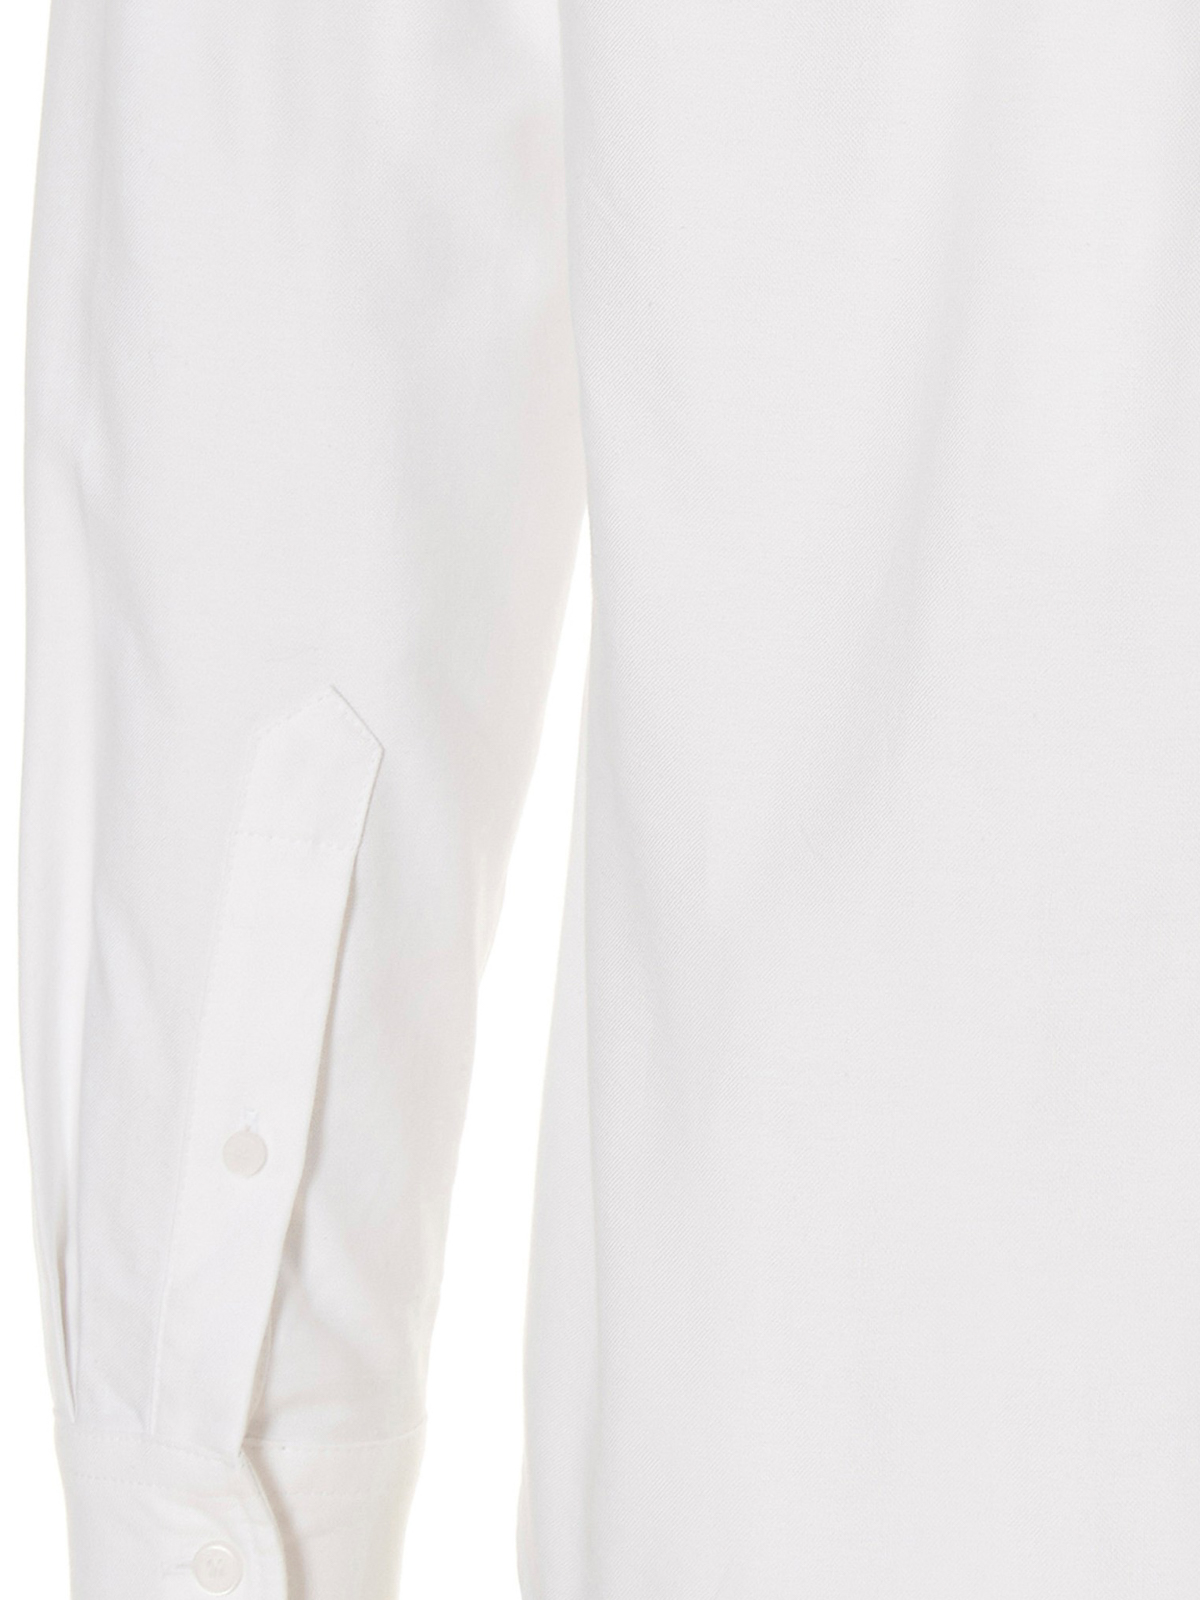 Shop Kenzo Camisa - Blanco